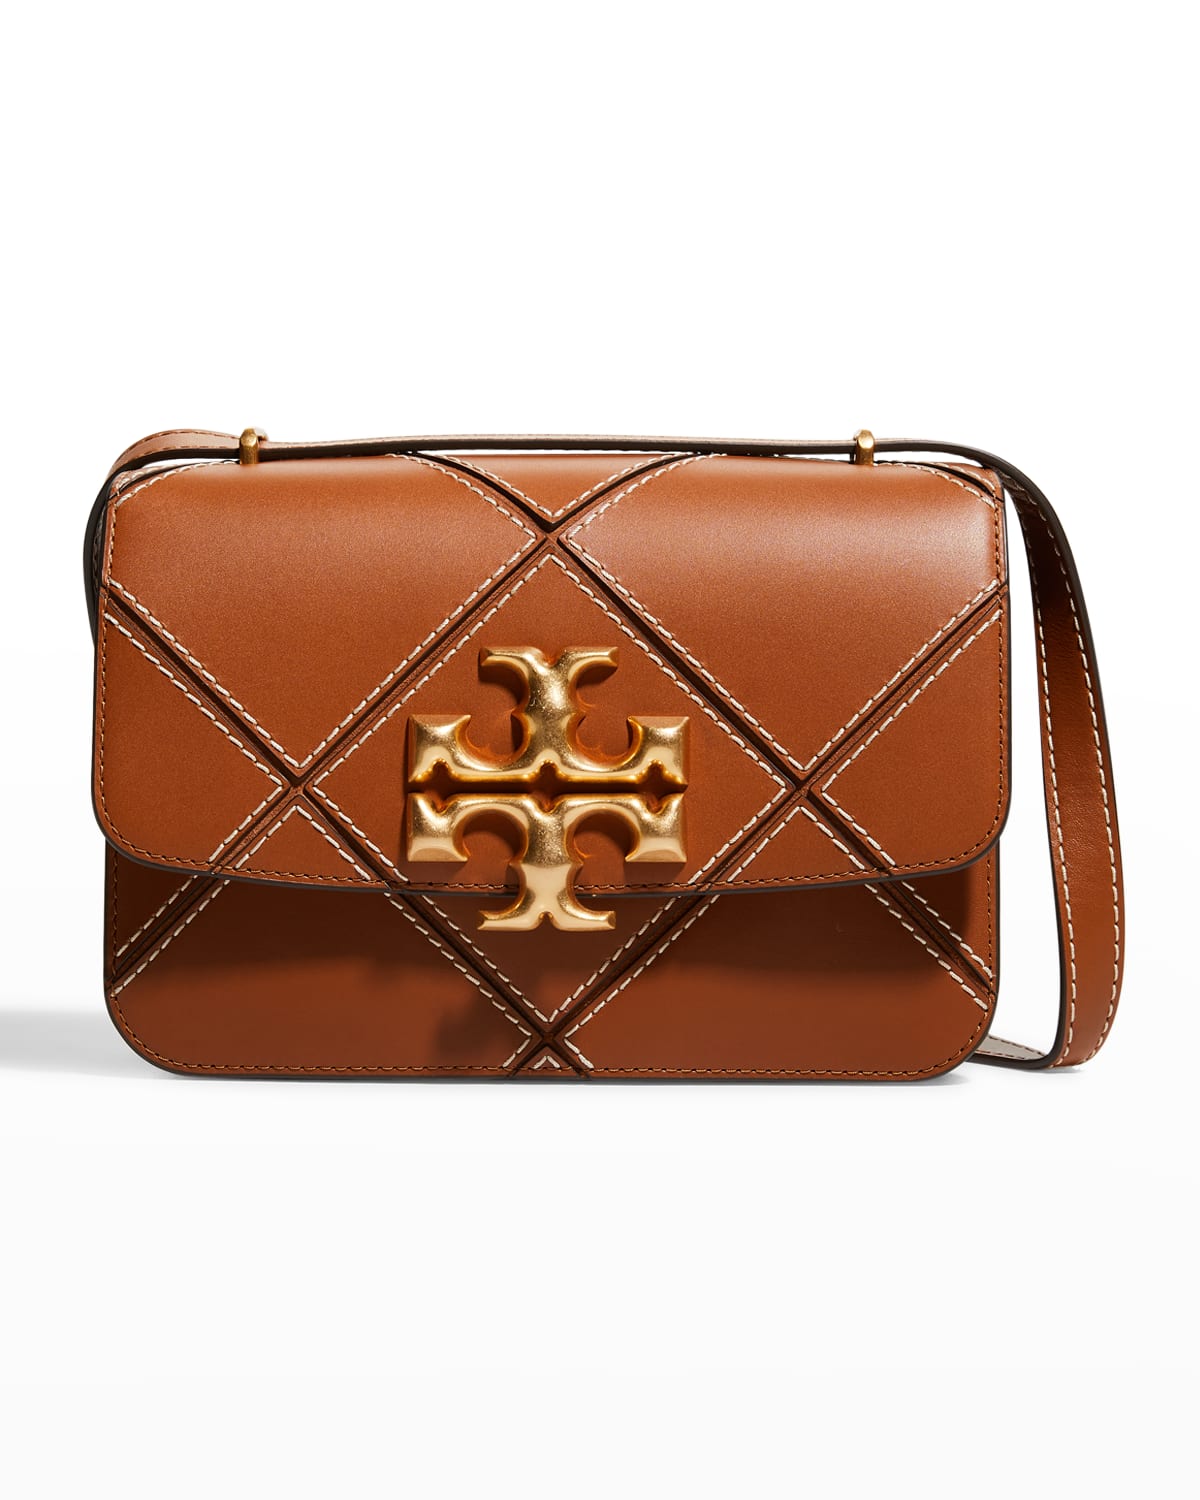 Tory Burch Imported Leather Handbag | Neiman Marcus